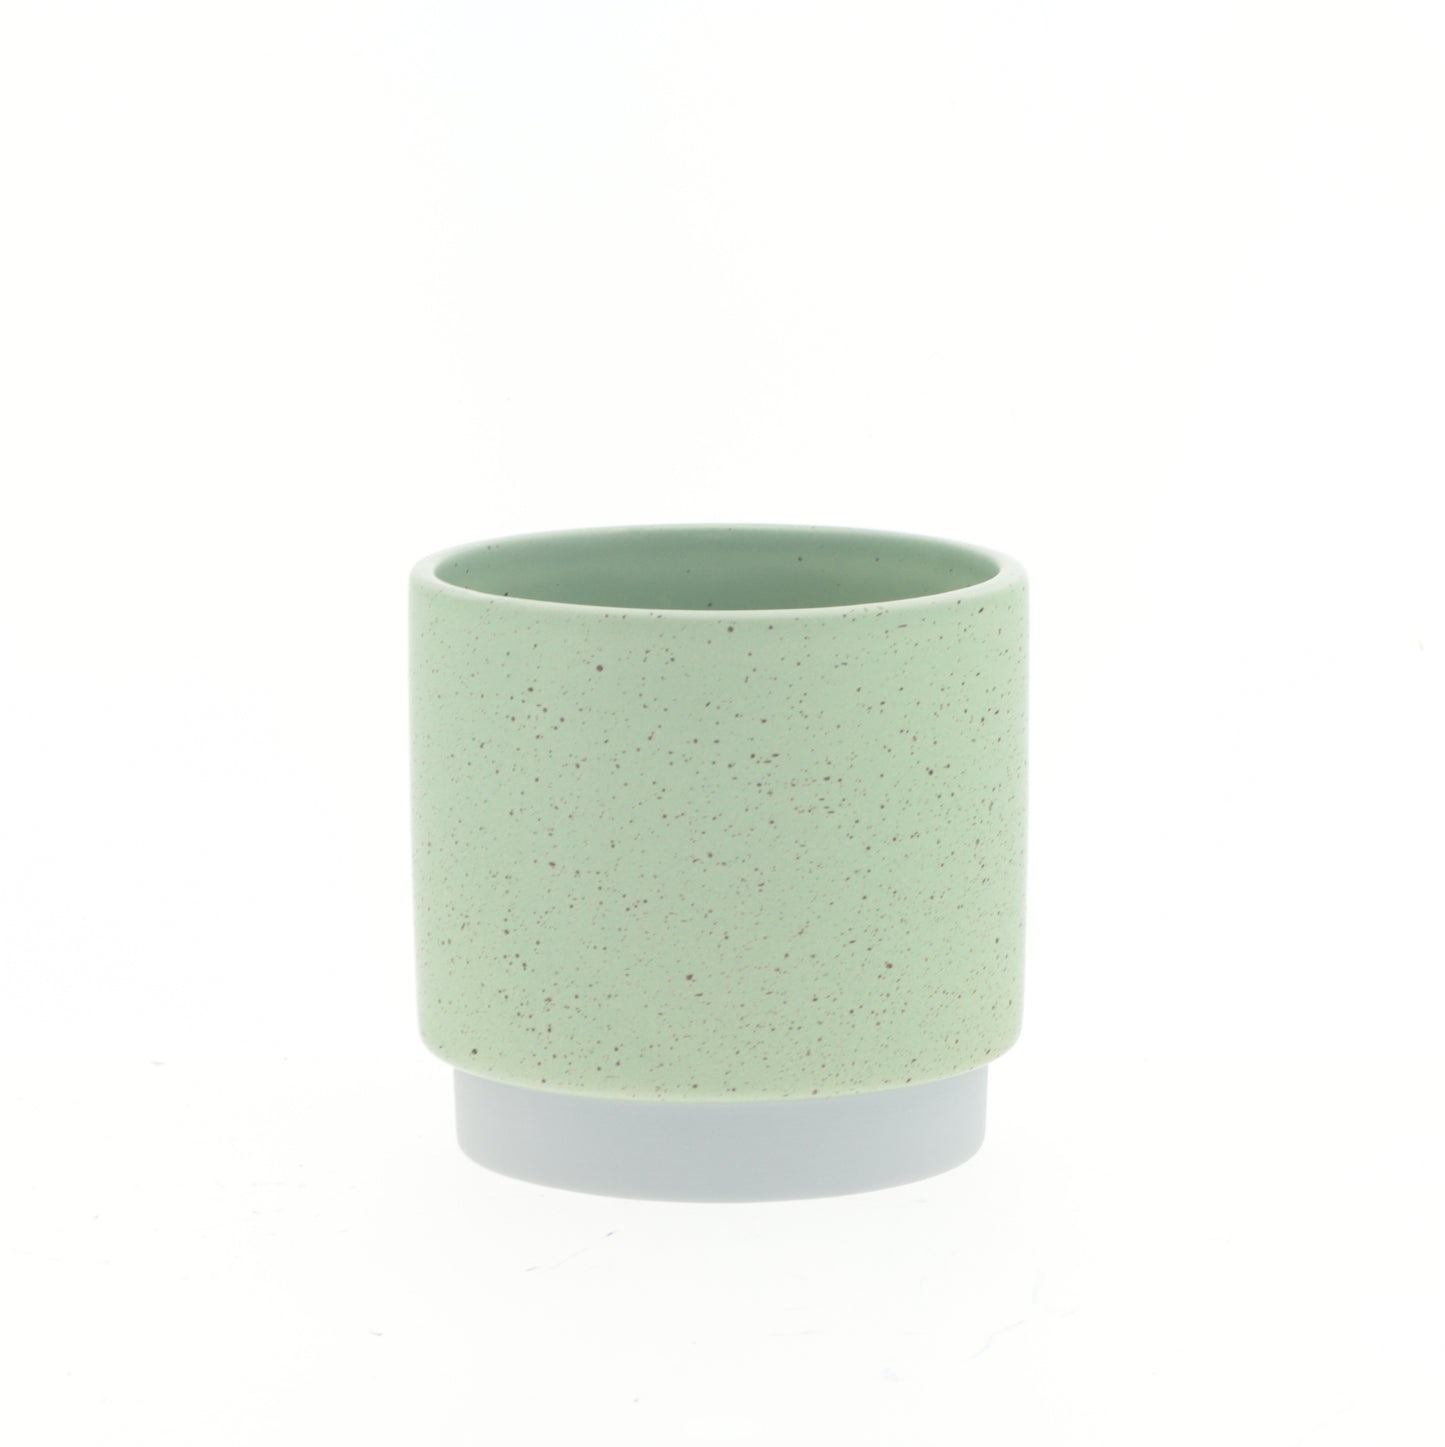 1x Ceramic Claudine Pot - Green - Various Sizes